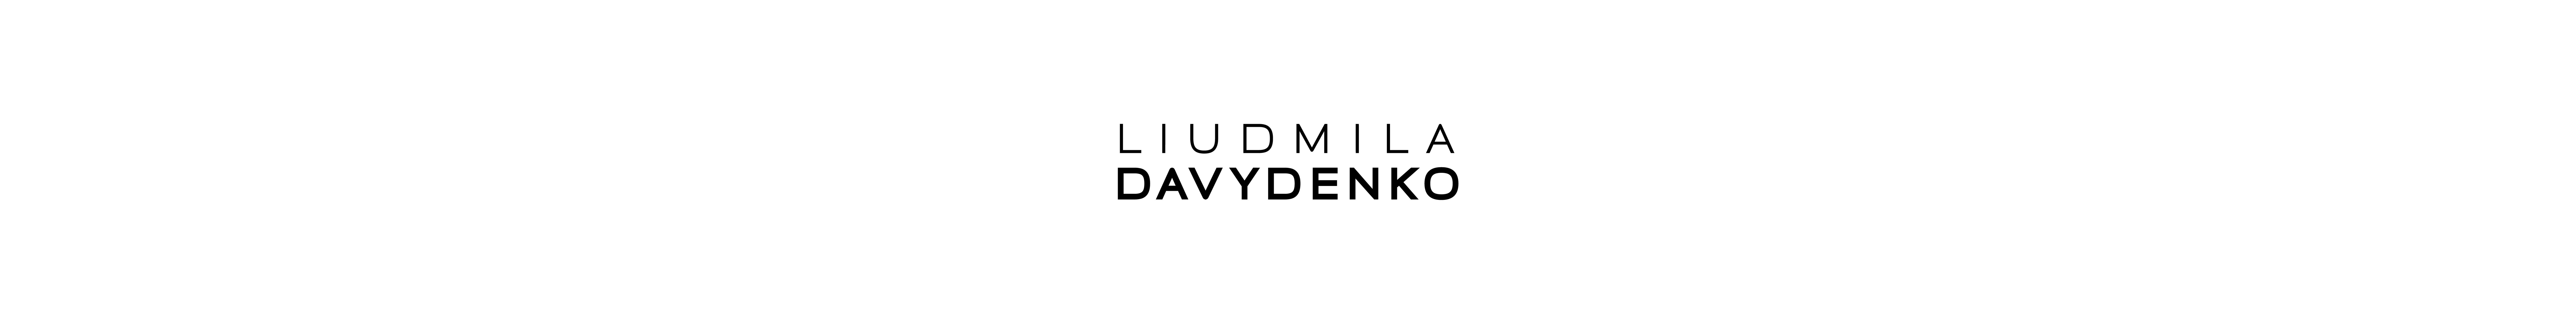 Liudmila Davydenko's profile banner